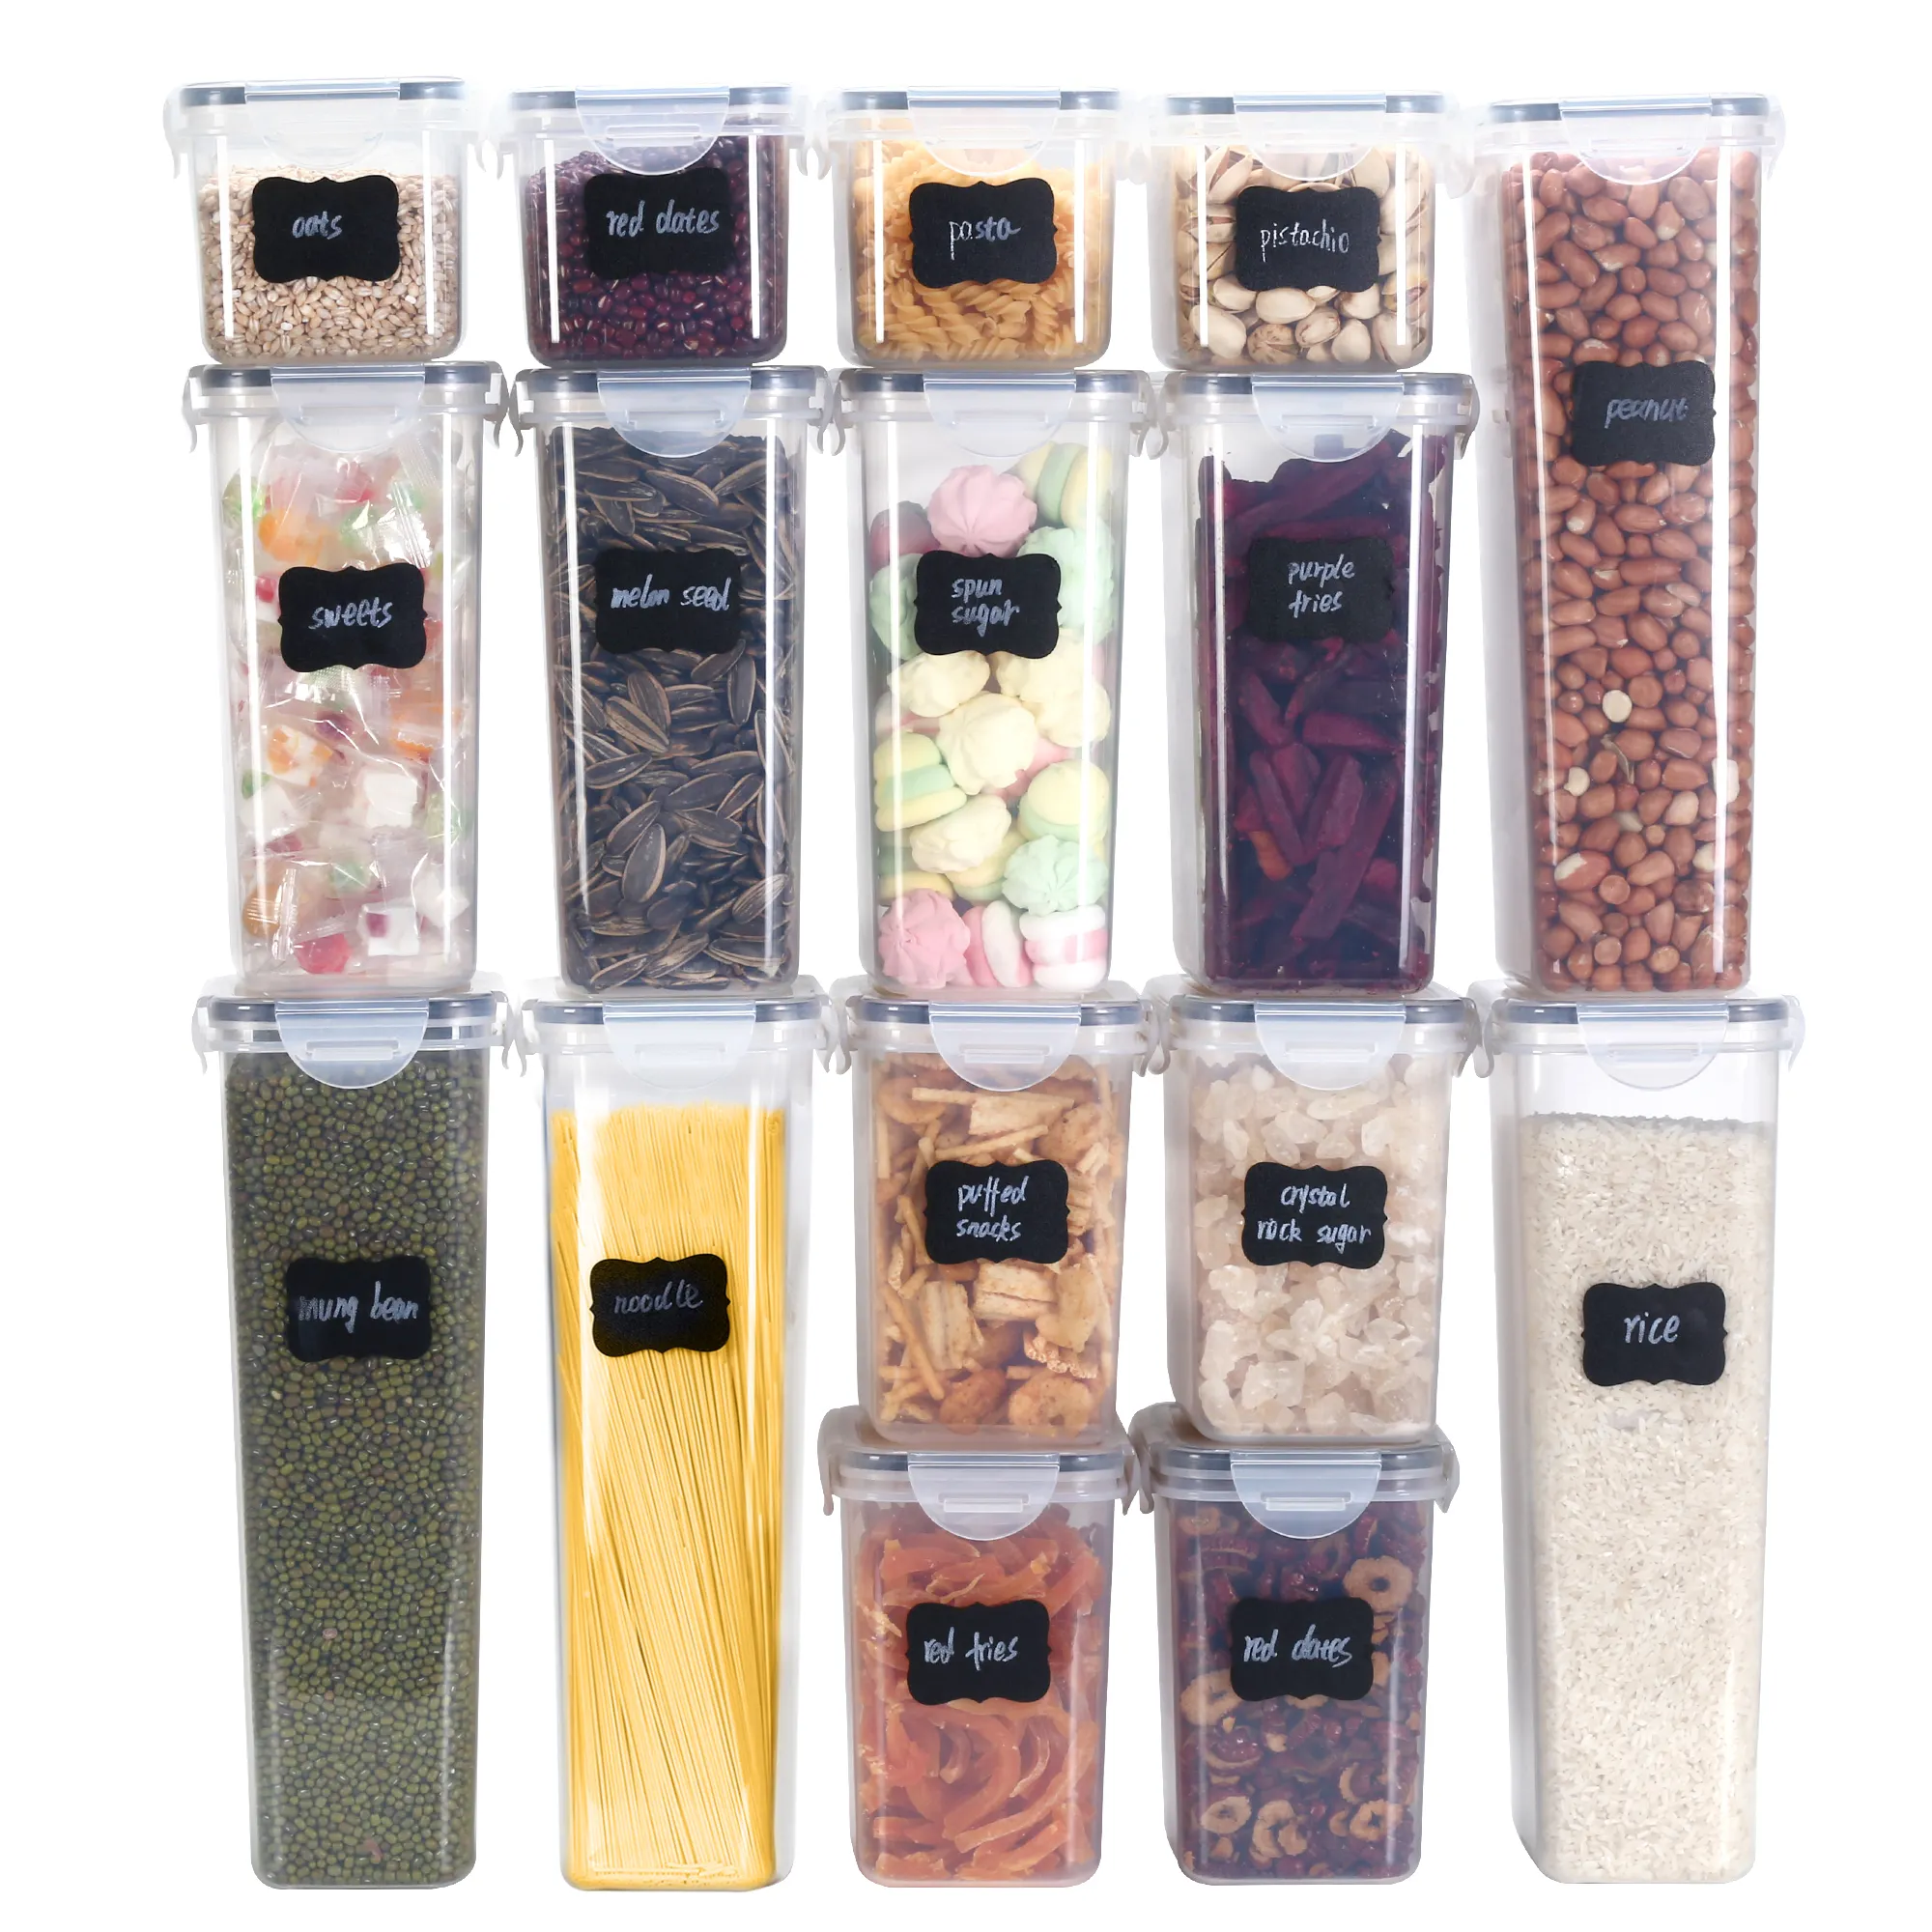 Cereali da cucina e cereali scatola di conservazione scatola di conservazione materiale PP cibo Set da cucina trasparente stoviglie moderne 1-2L